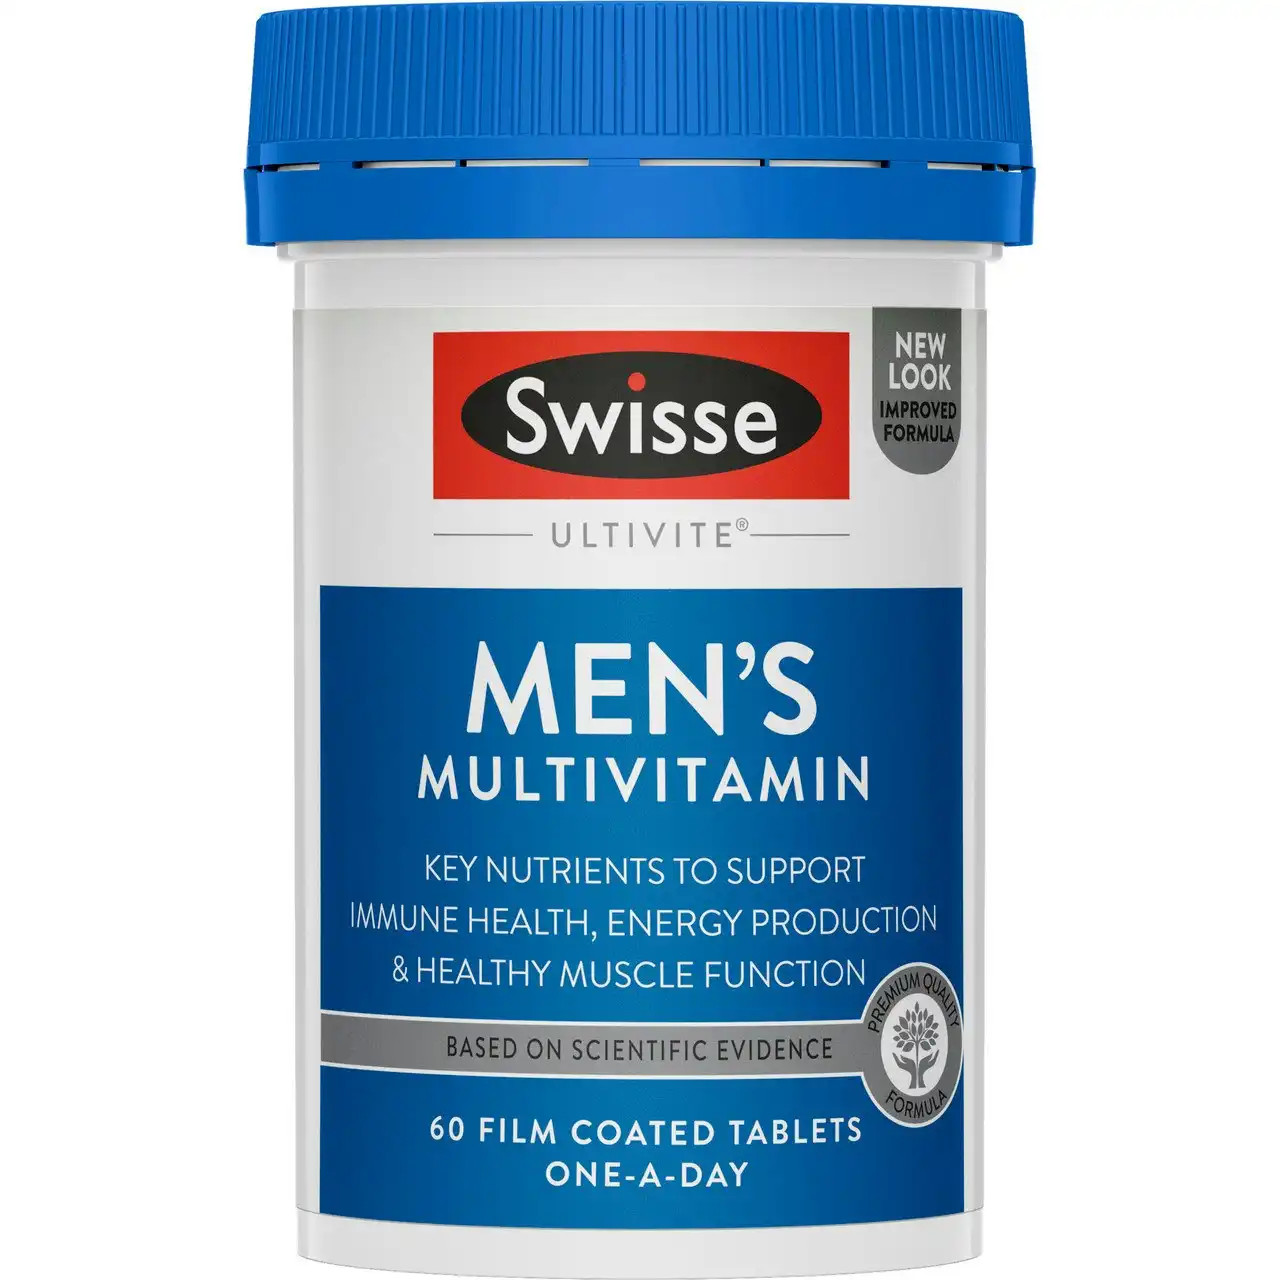 Swisse Ultivite Men's Multivitamin 60 Tablets